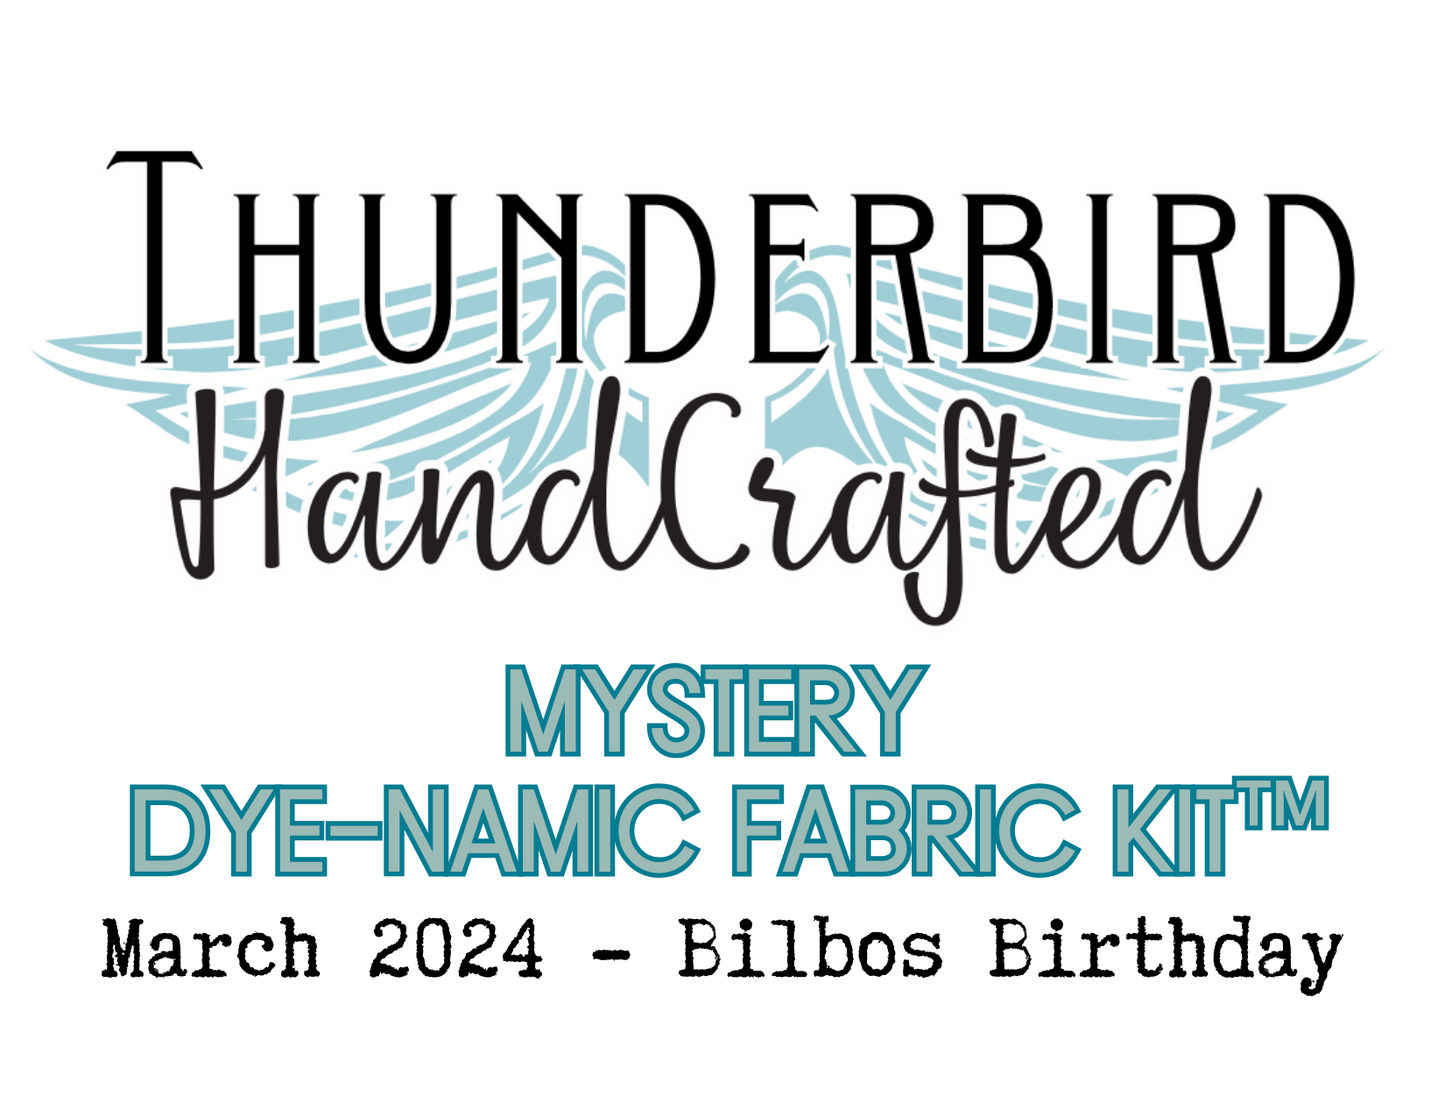 March 2024 Dye-Namic Fabric Kit™ - Bilbos Birthday